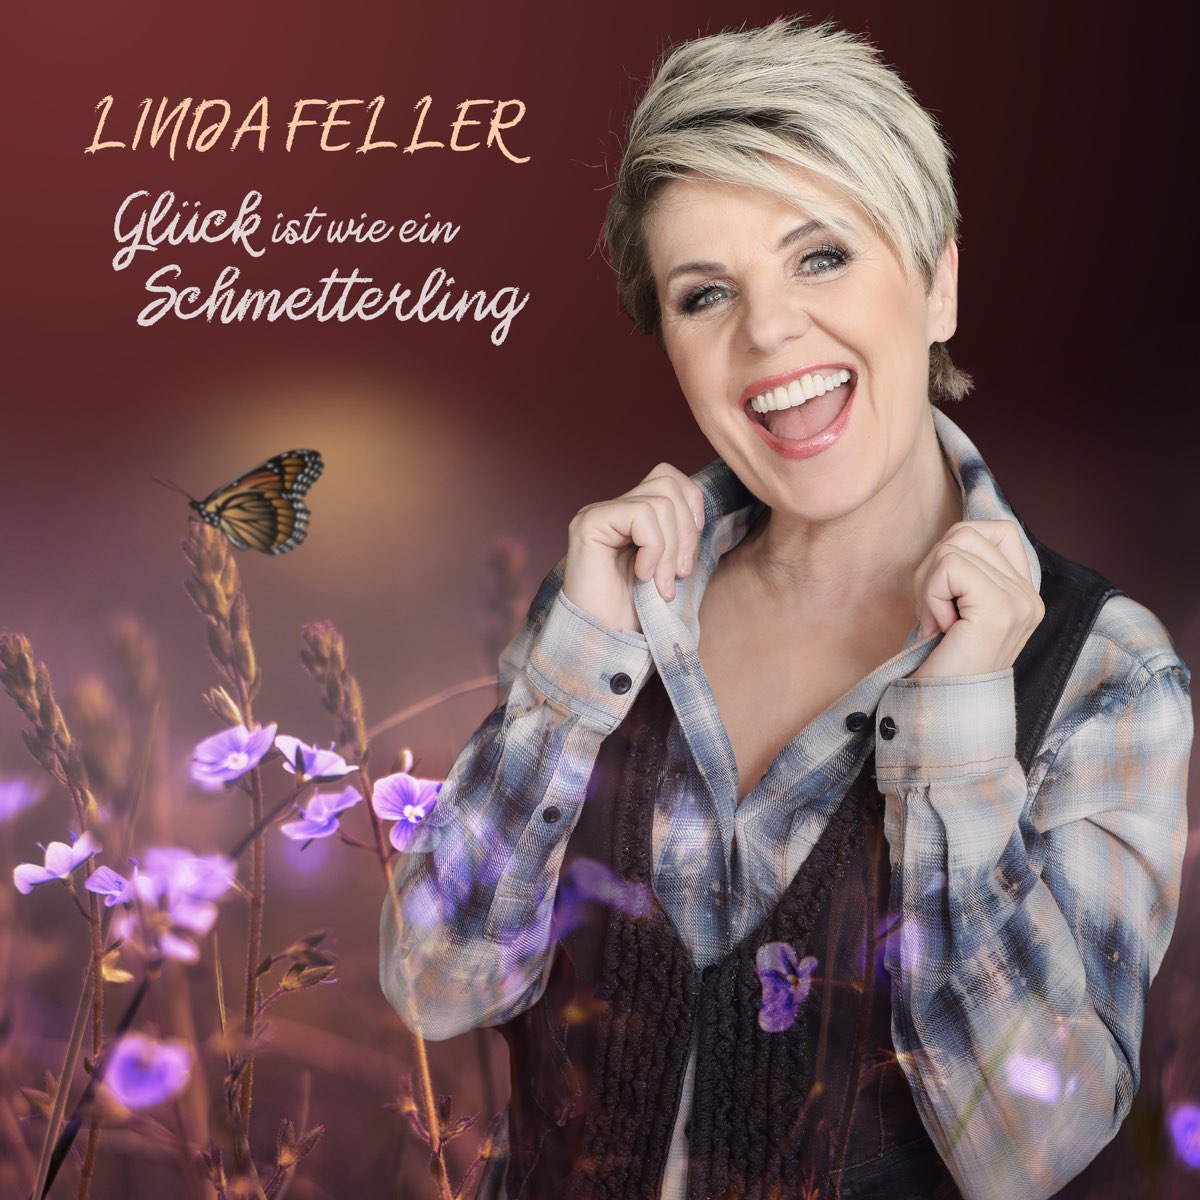 ‎Glück ist wie ein Schmetterling - Single - Album by Linda Feller